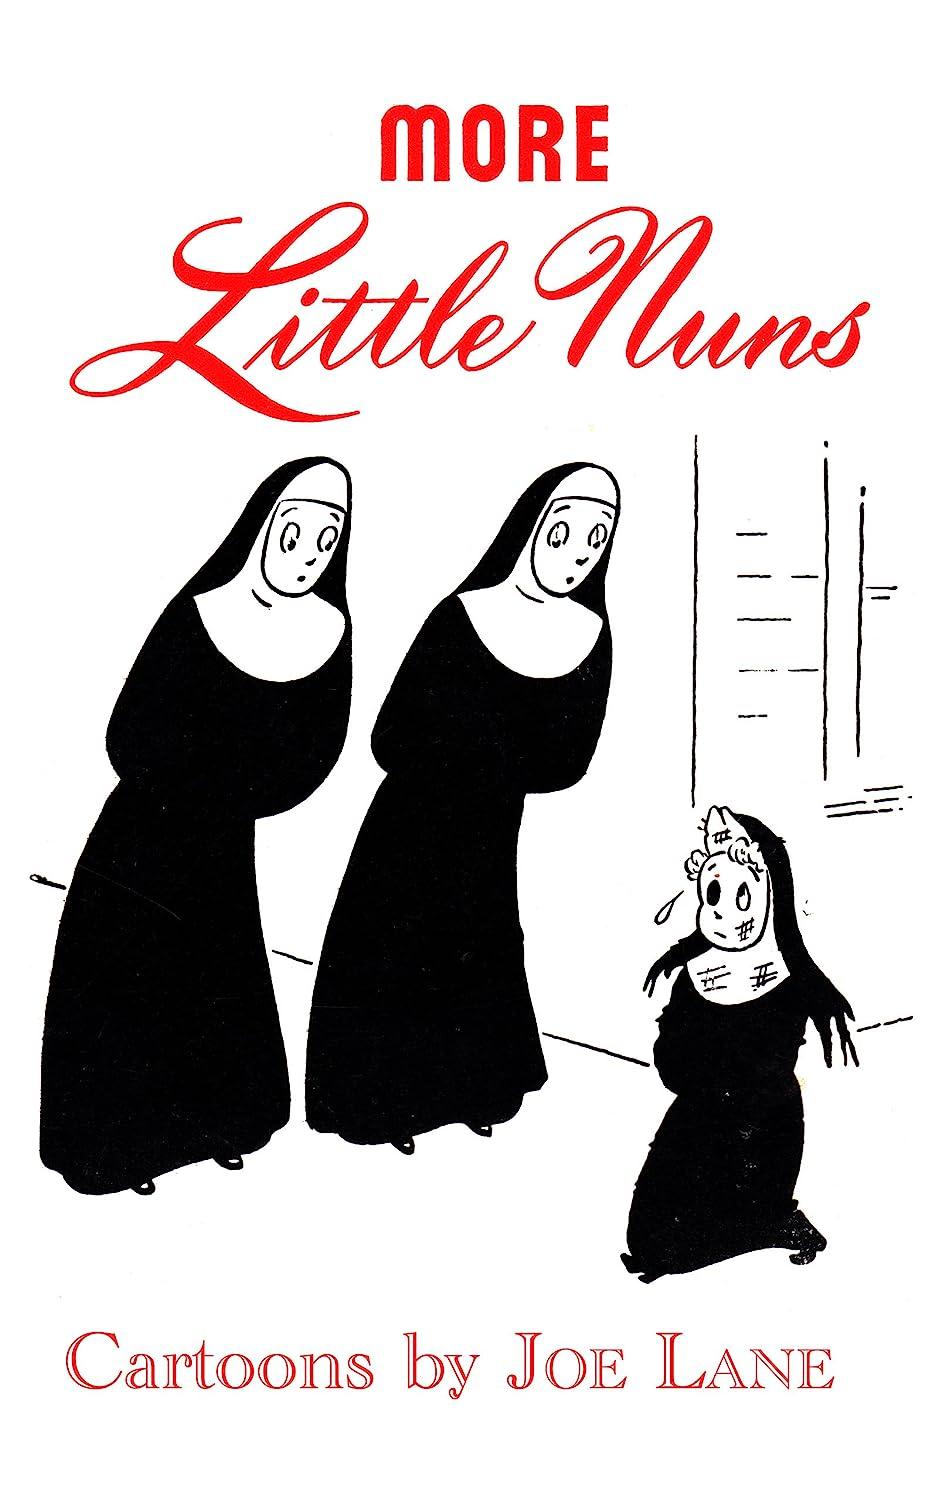 More little nuns